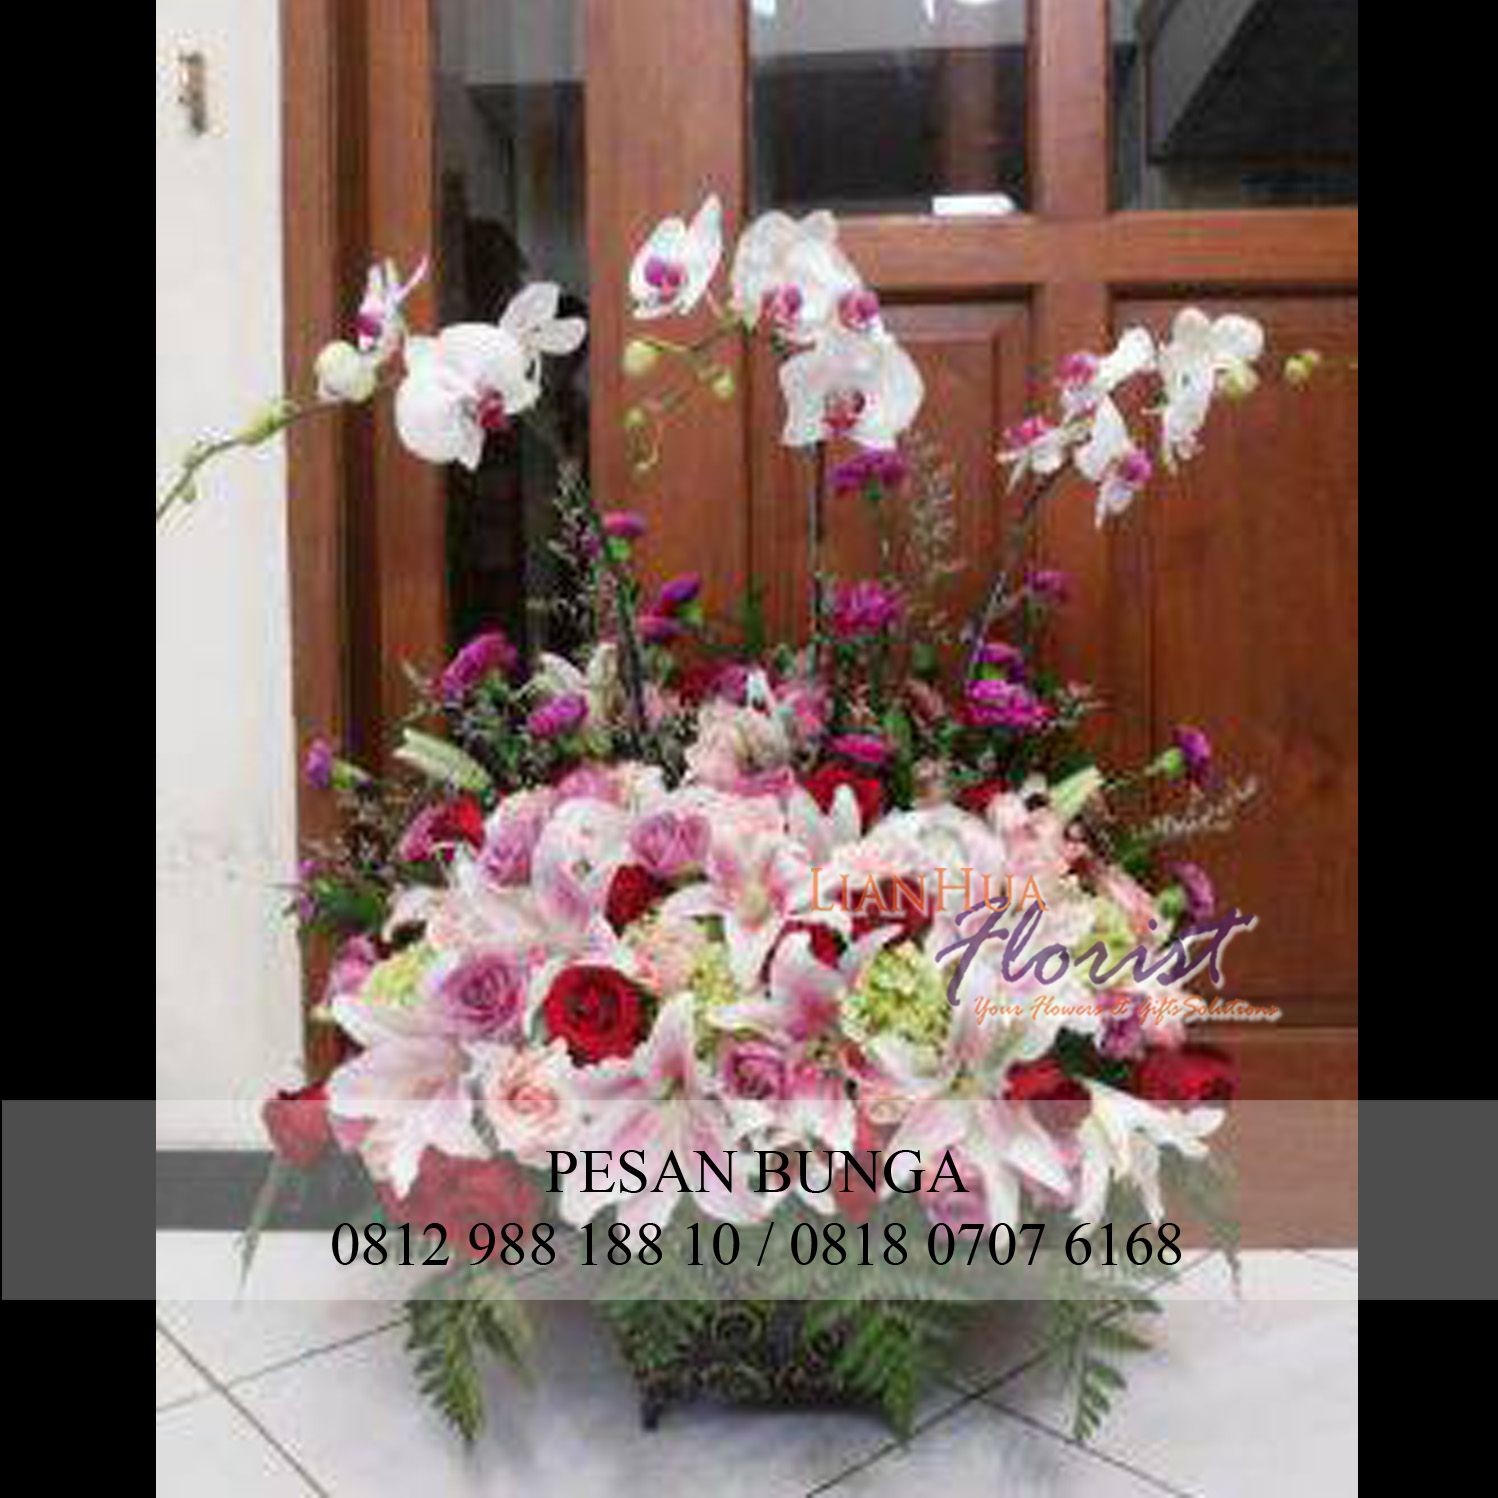 Toko Bunga  Jakarta Florist Online Flowers Shop Indonesia